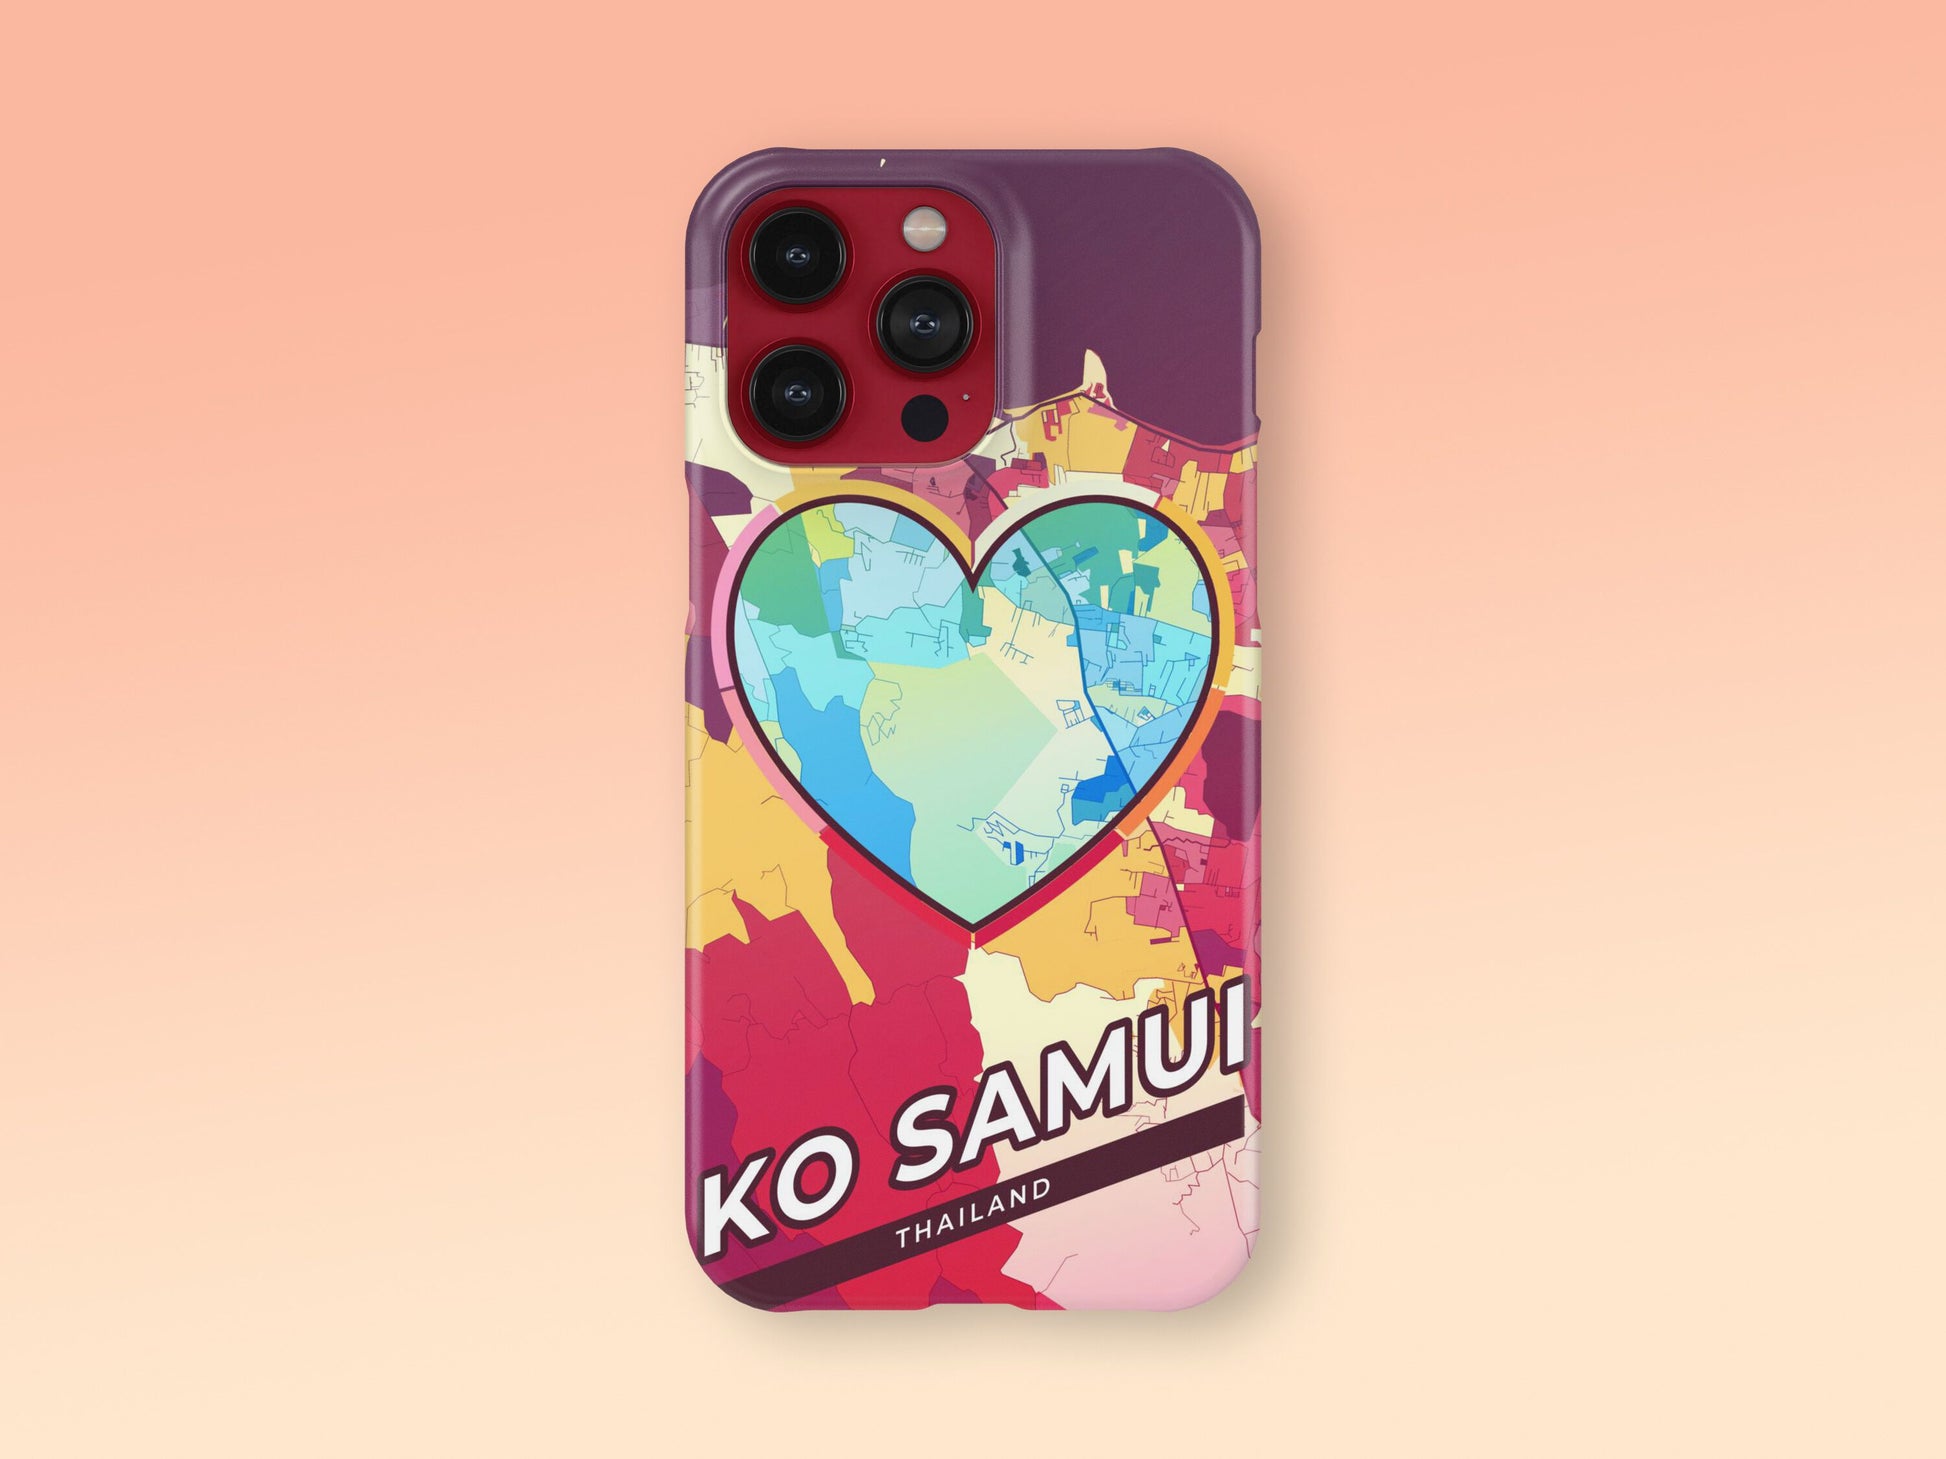 Ko Samui Thailand slim phone case with colorful icon. Birthday, wedding or housewarming gift. Couple match cases. 2